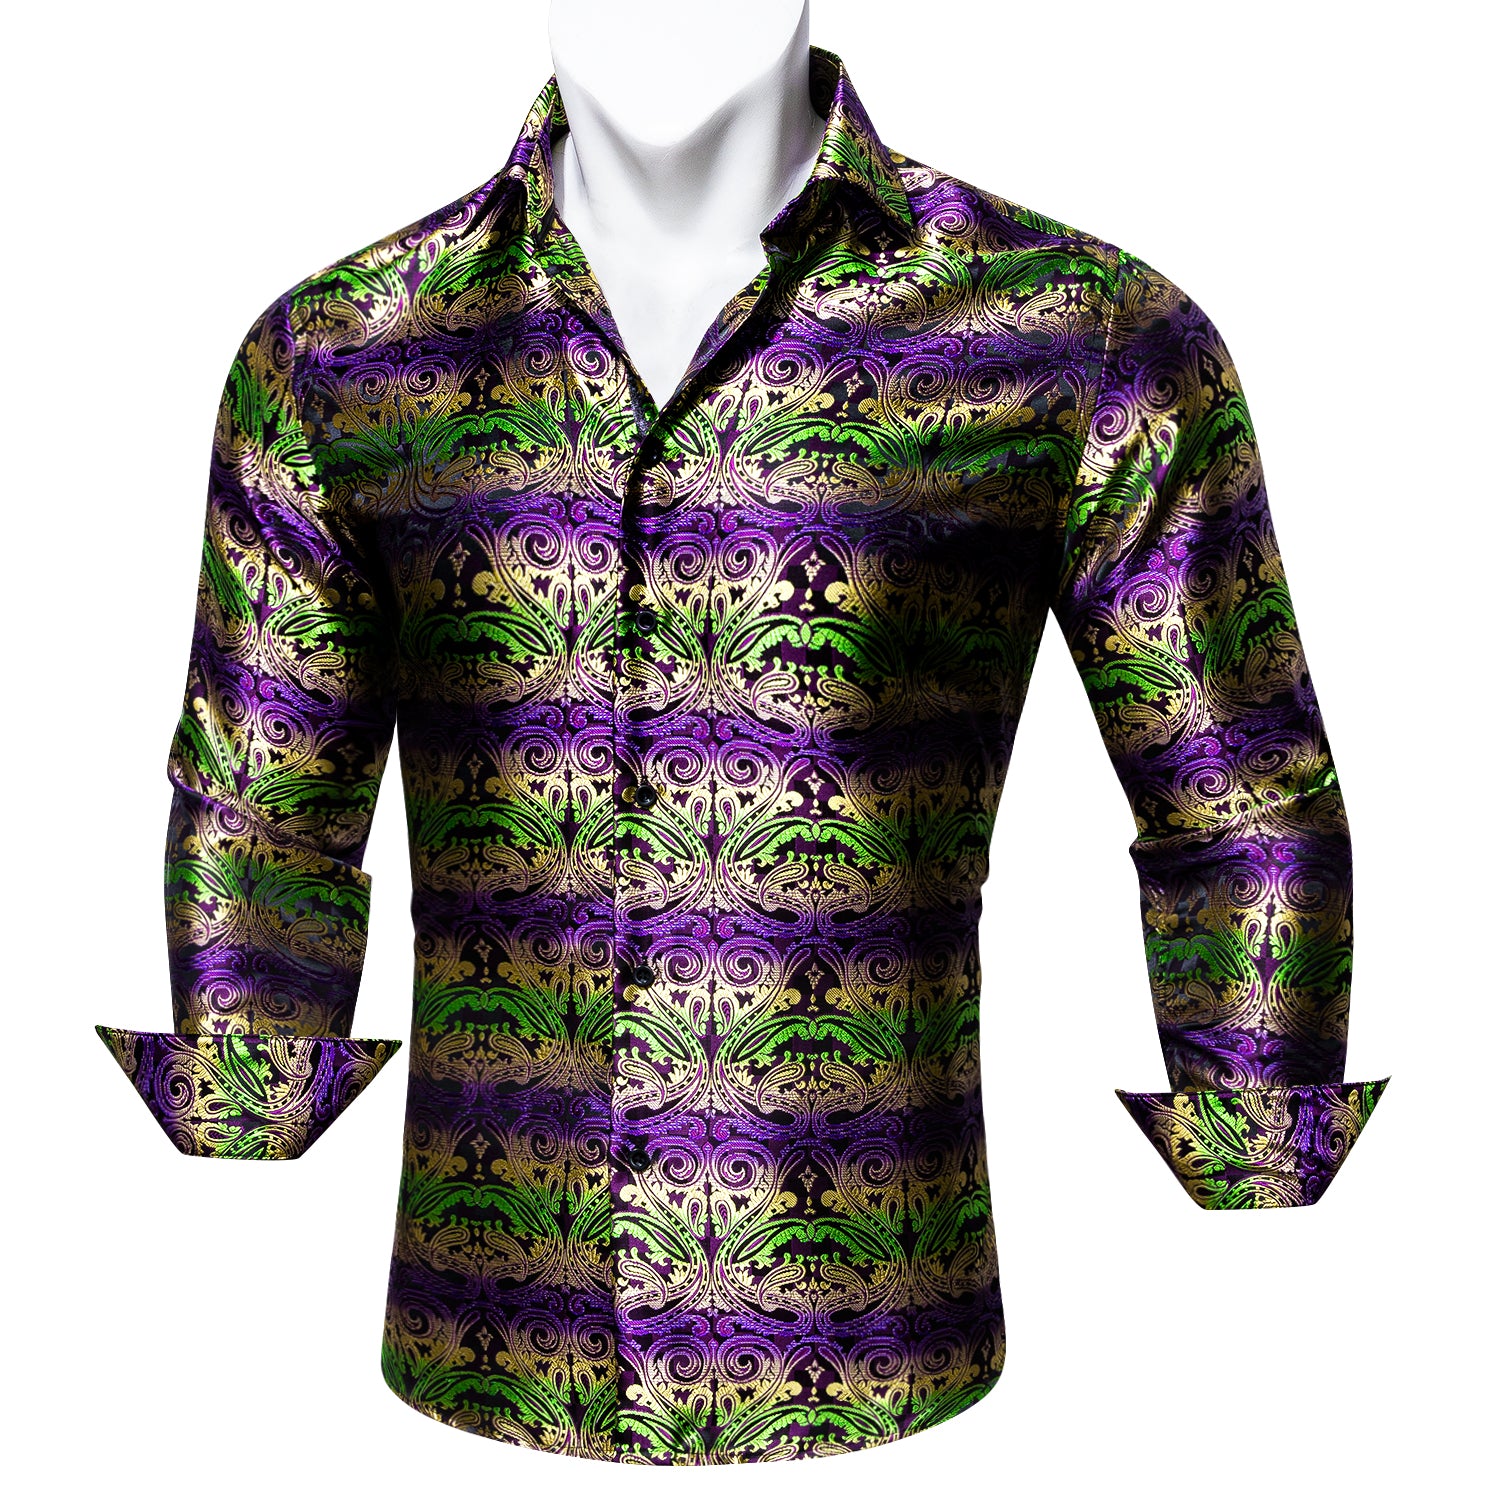 Barry.wang Purple Green Paisley Silk Men's Long Sleeve Shirt